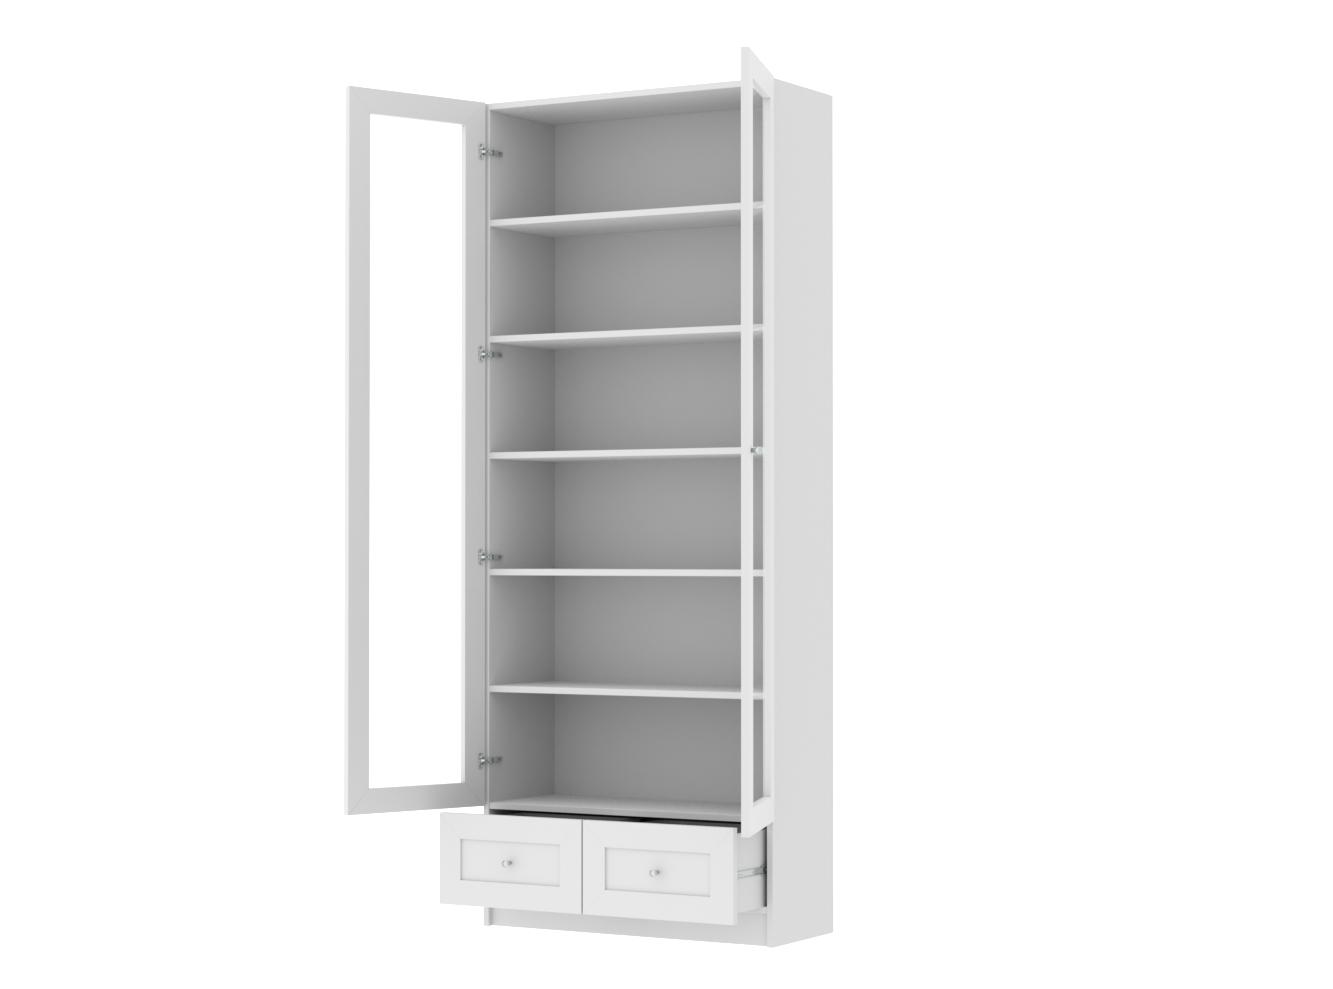 Книжный шкаф Билли 315 white ИКЕА (IKEA) изображение товара